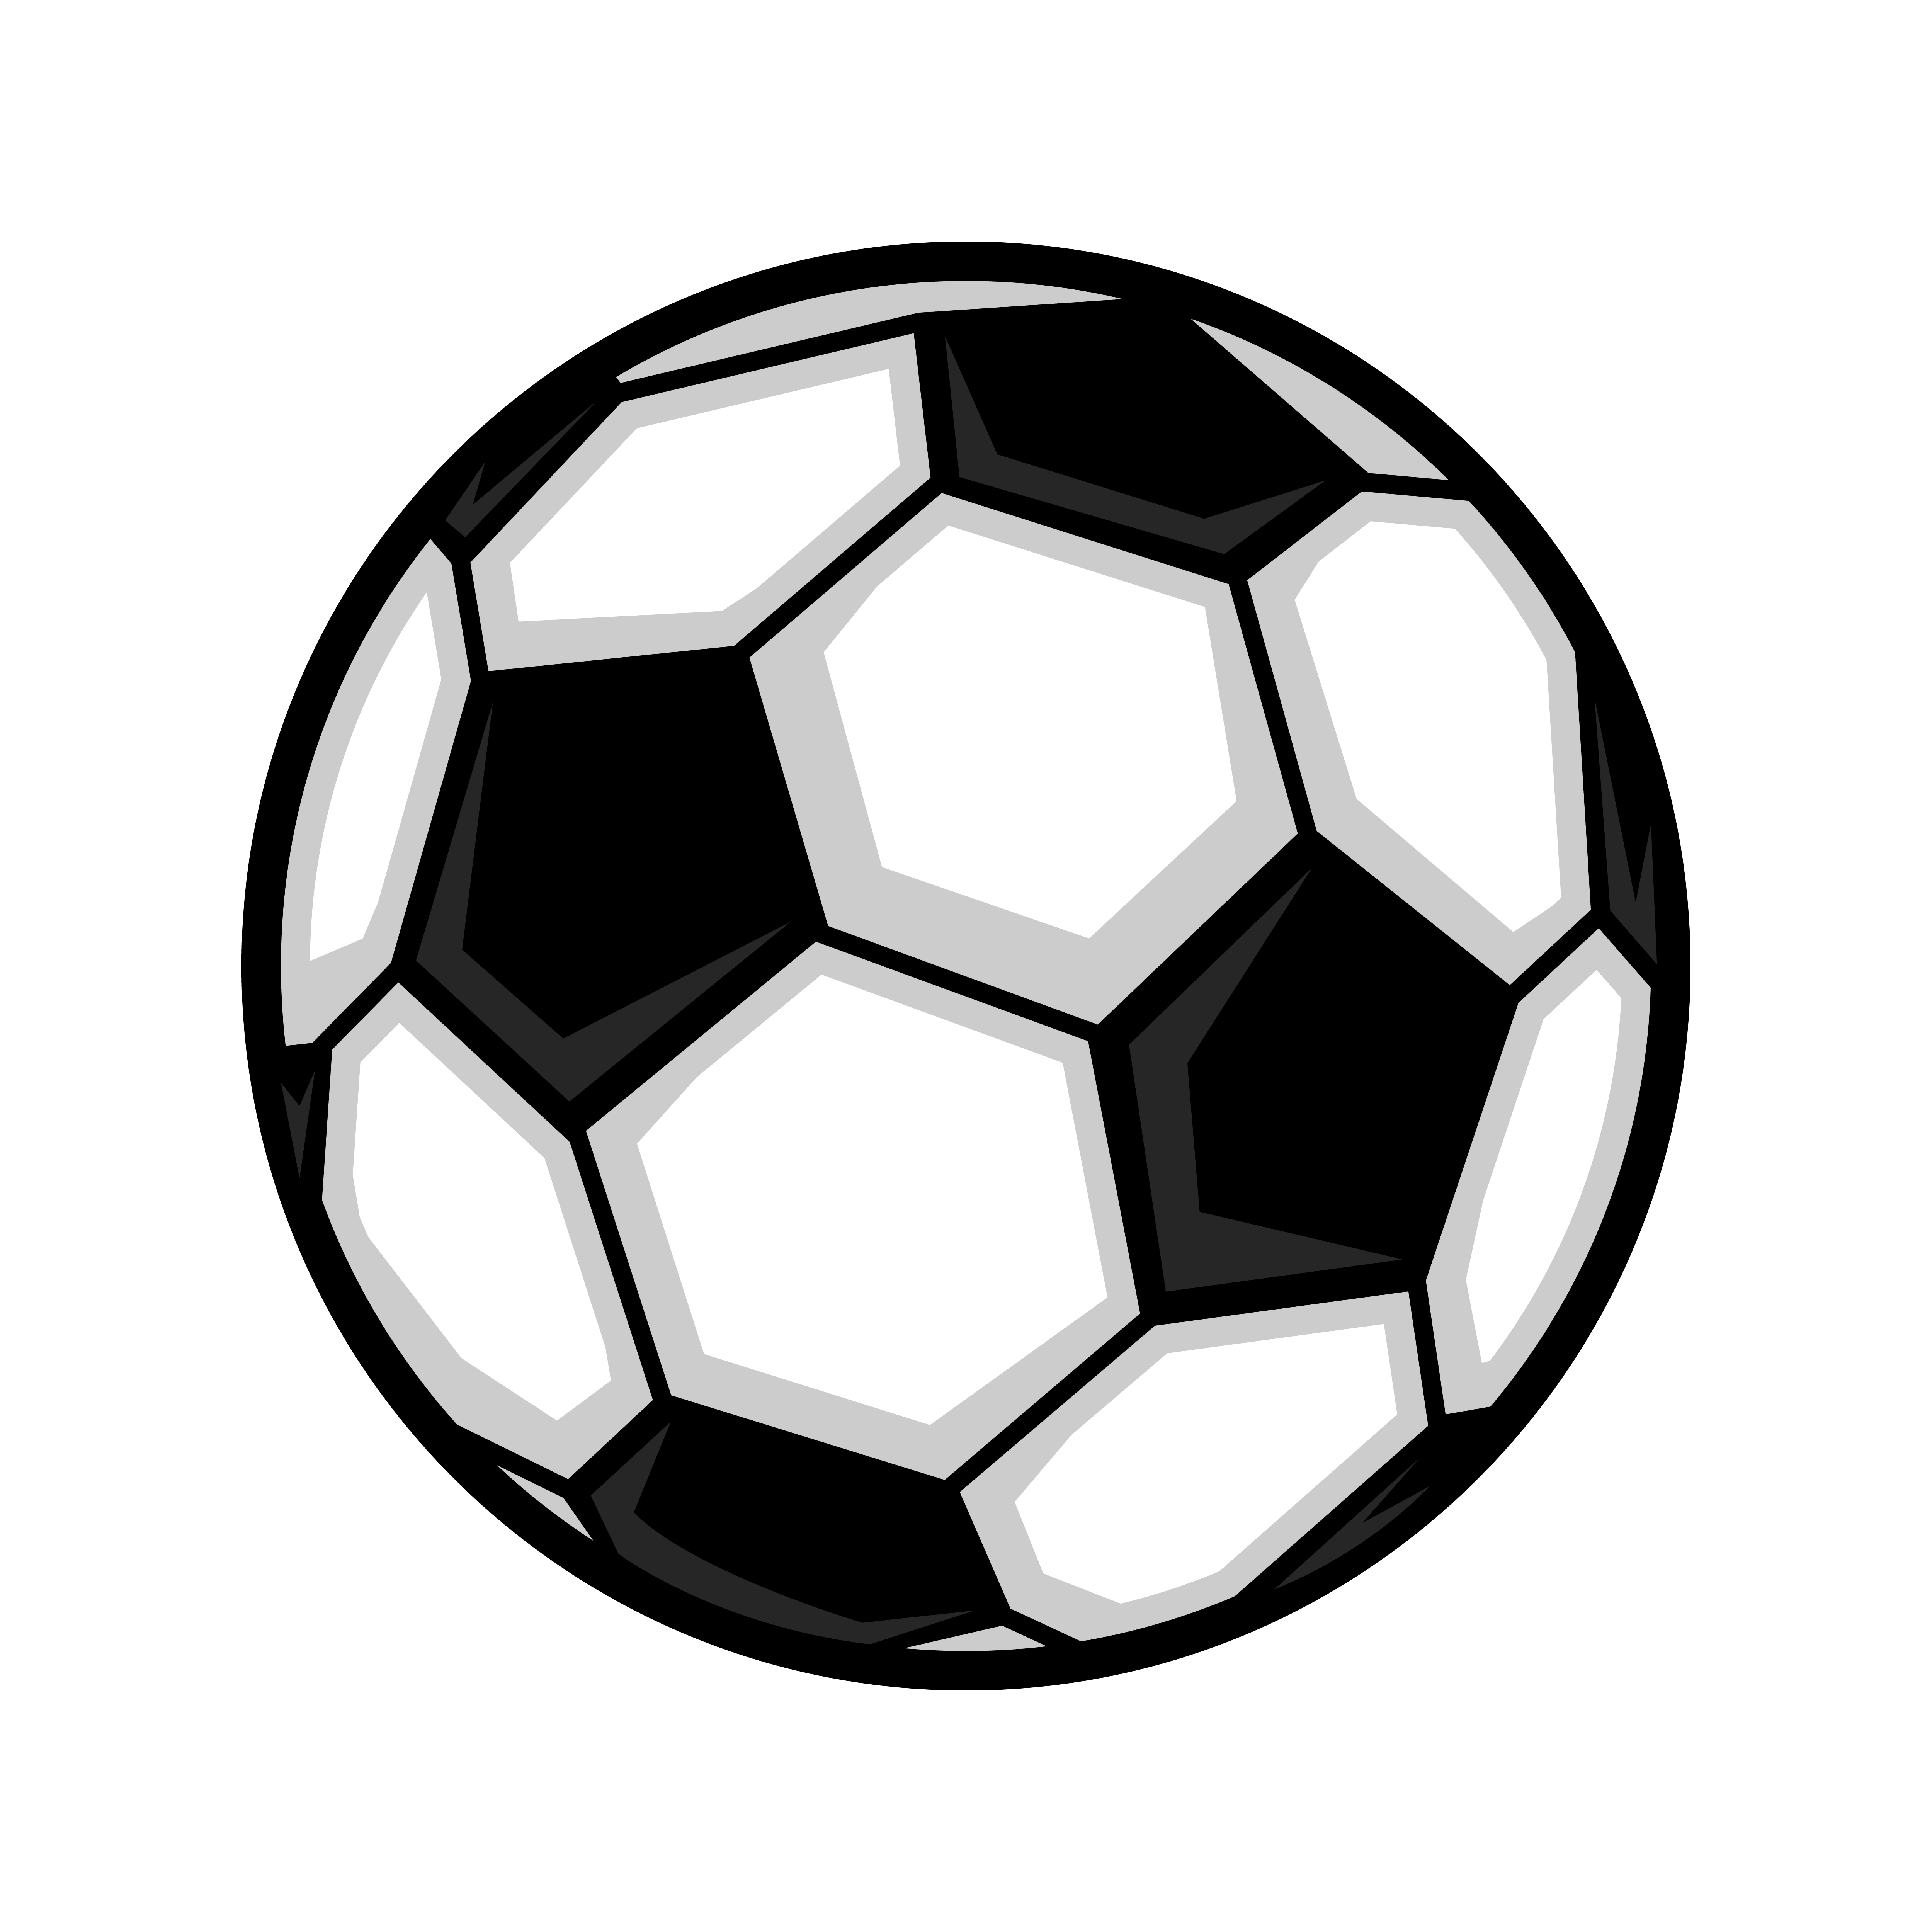 Download Soccer Ball vector icon - Download Free Vectors, Clipart Graphics & Vector Art